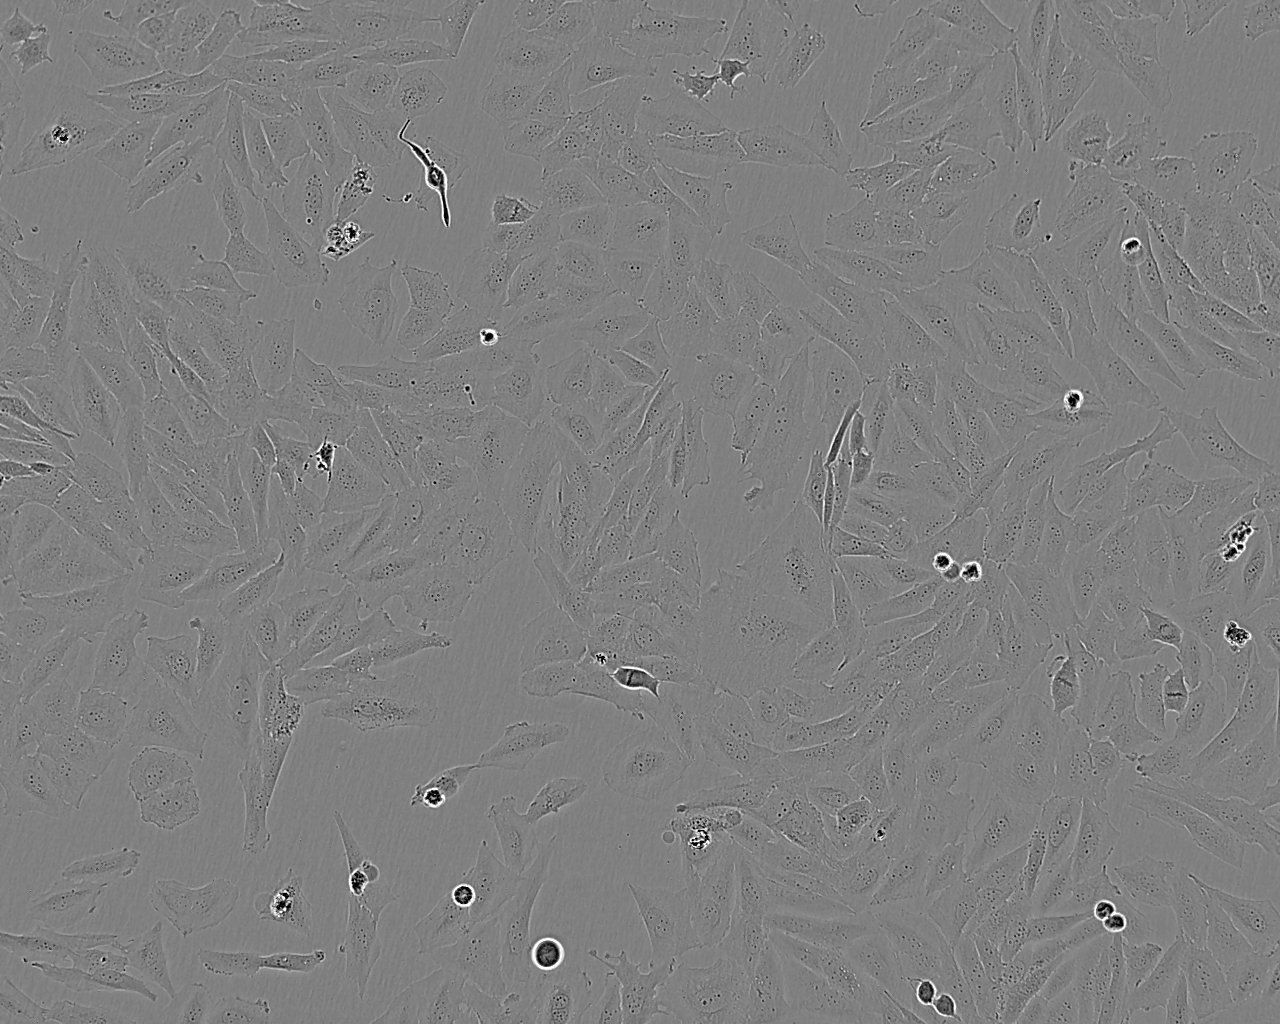 C8161 epithelioid cells人黑色素瘤细胞系